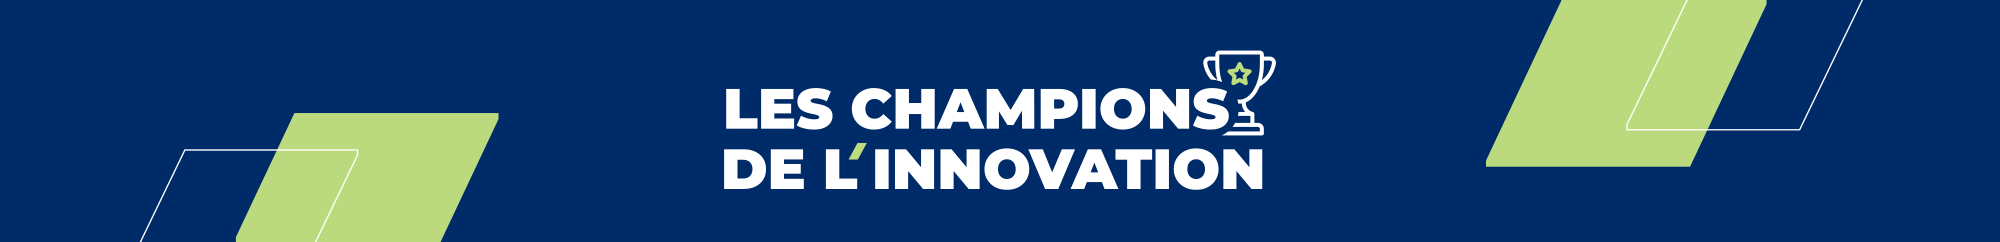 KP1 - les champions de l'innovation